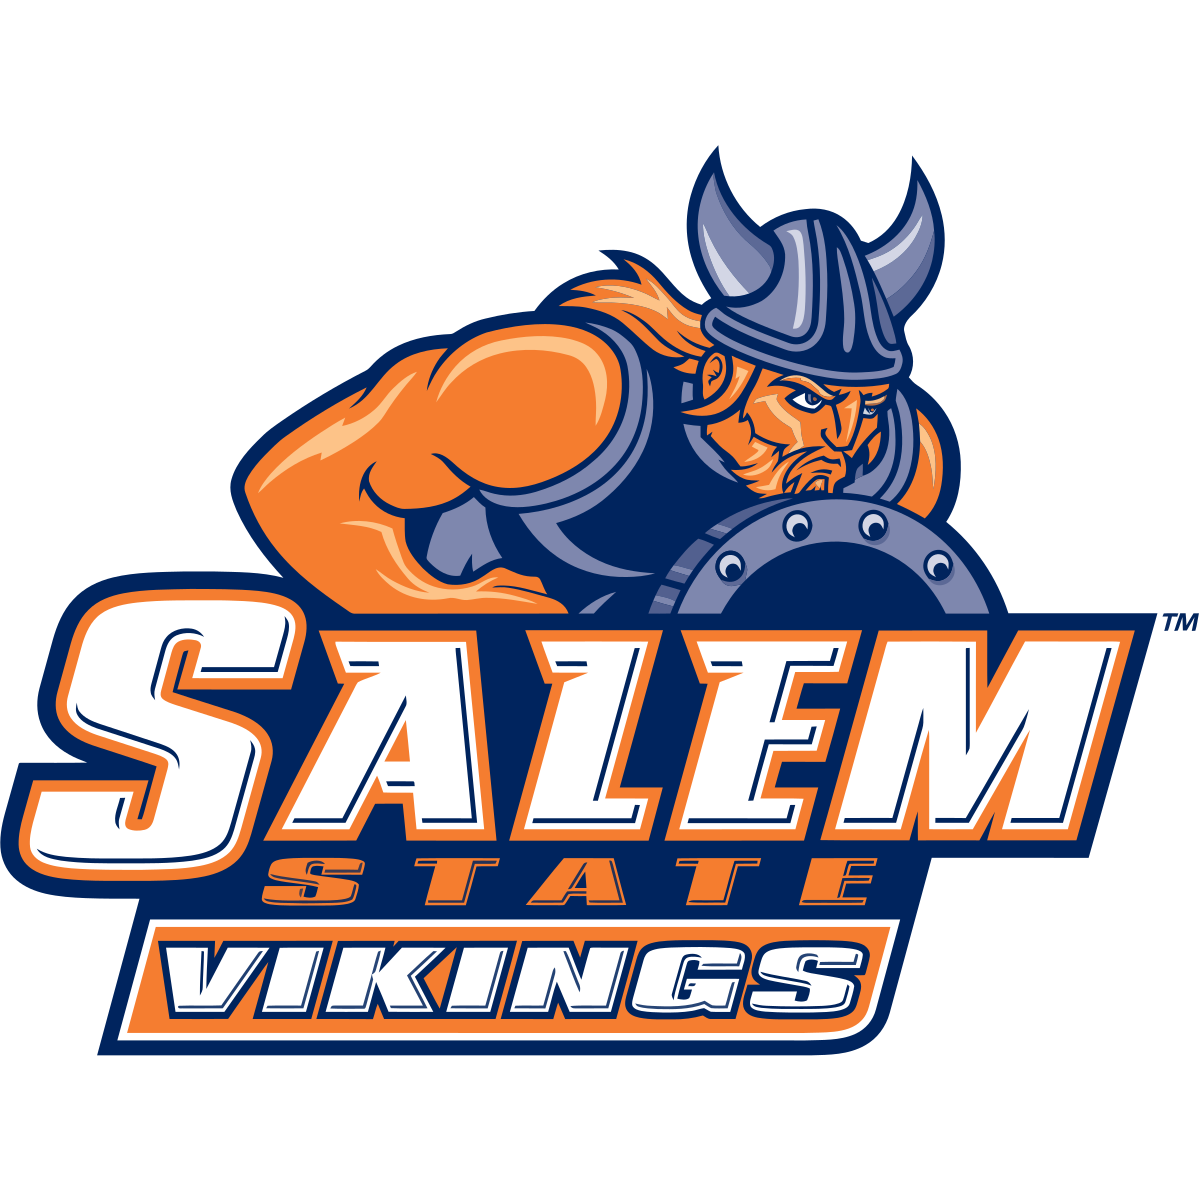 Salem State Vikings graphic for athletics